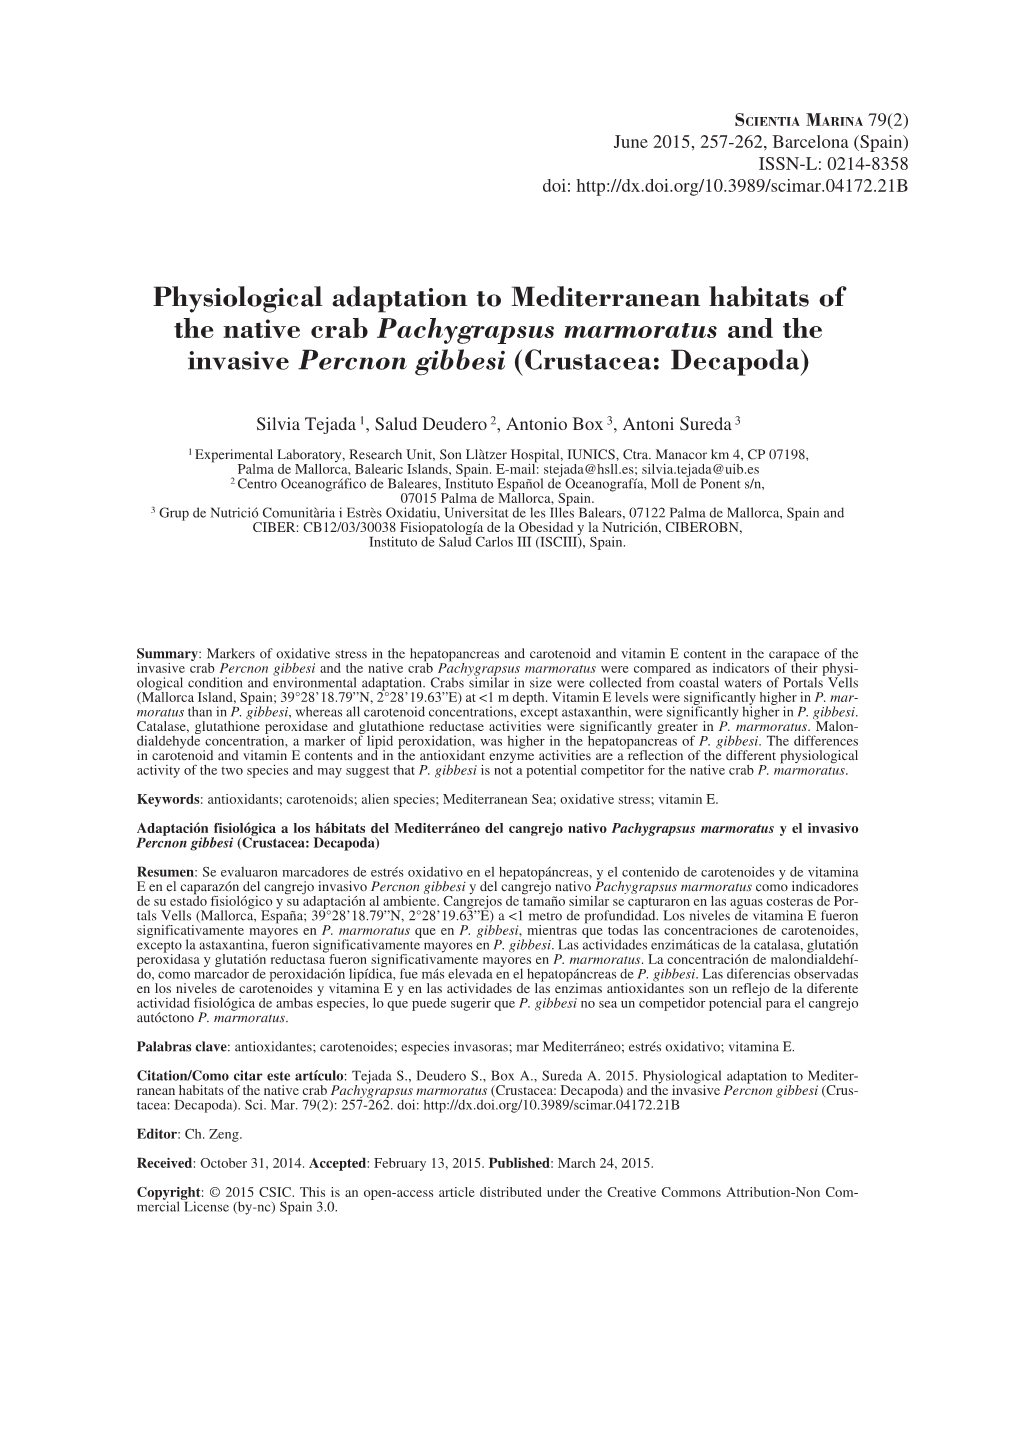 Physiological Adaptation to Mediterranean Habitats of the Native Crab Pachygrapsus Marmoratus and the Invasive Percnon Gibbesi (Crustacea: Decapoda)